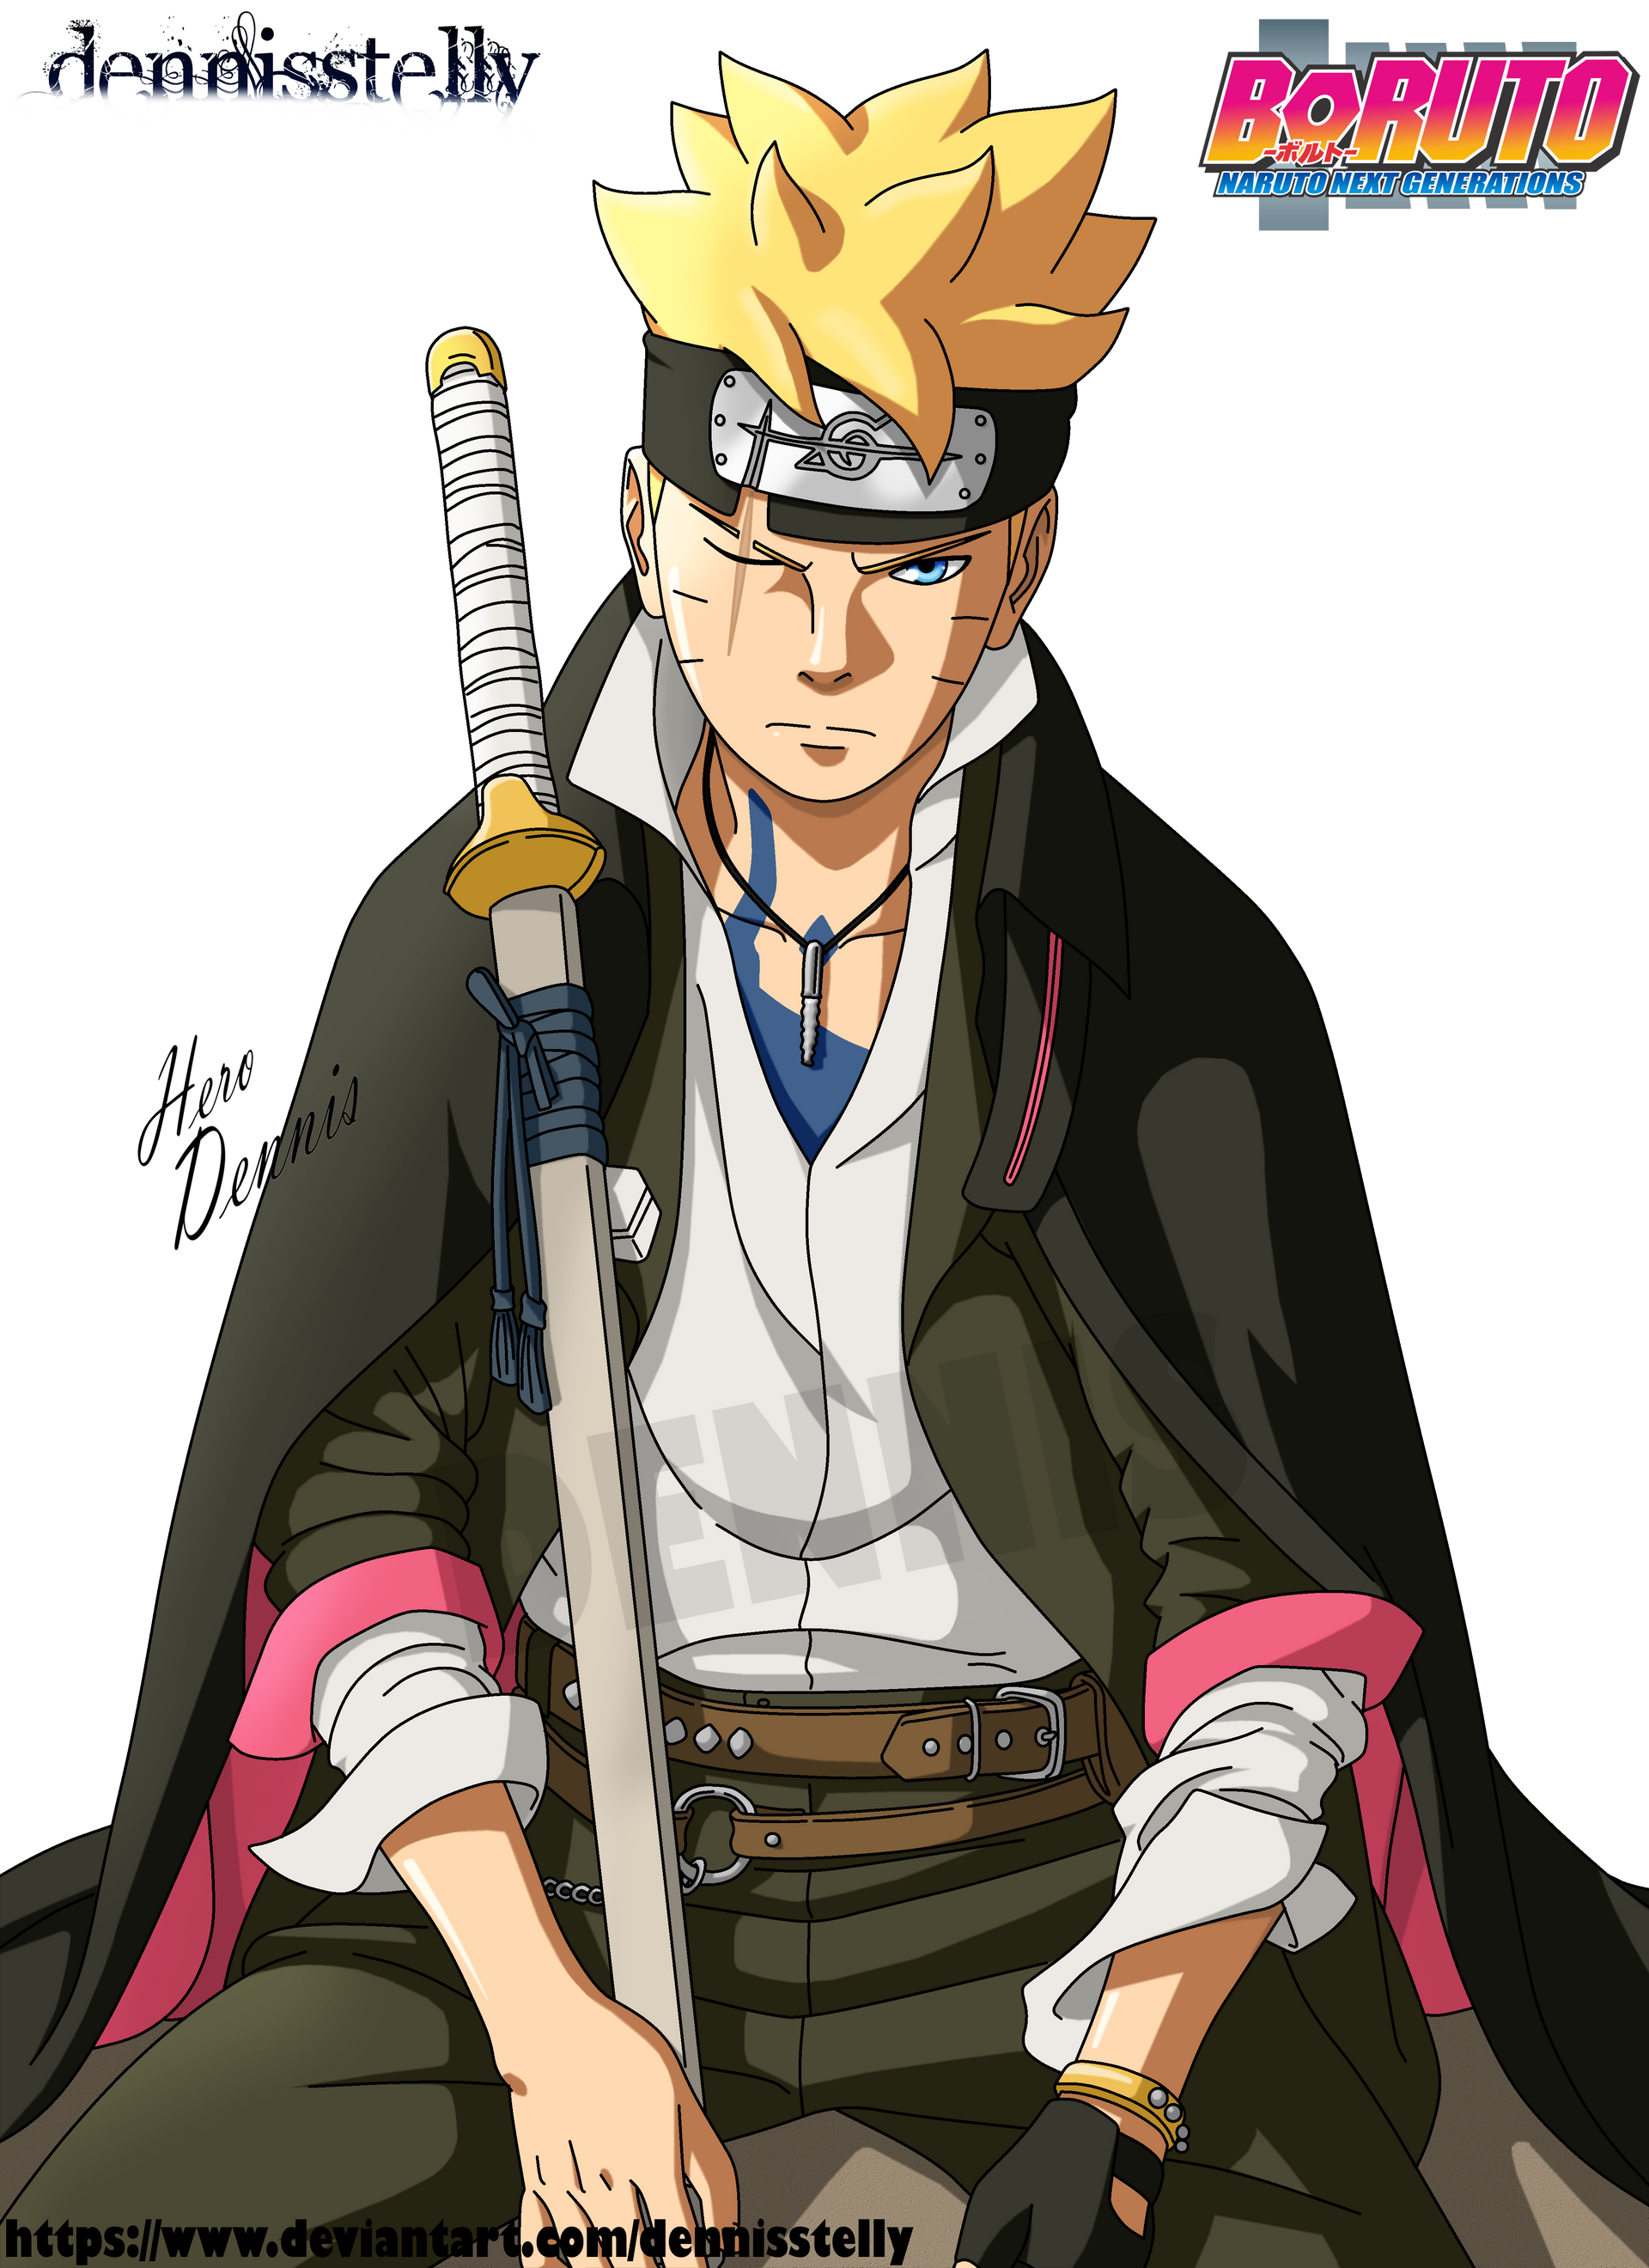 Boruto: Naruto Next GenerationsBoruto Uzumaki by JEJESZ777 on DeviantArt